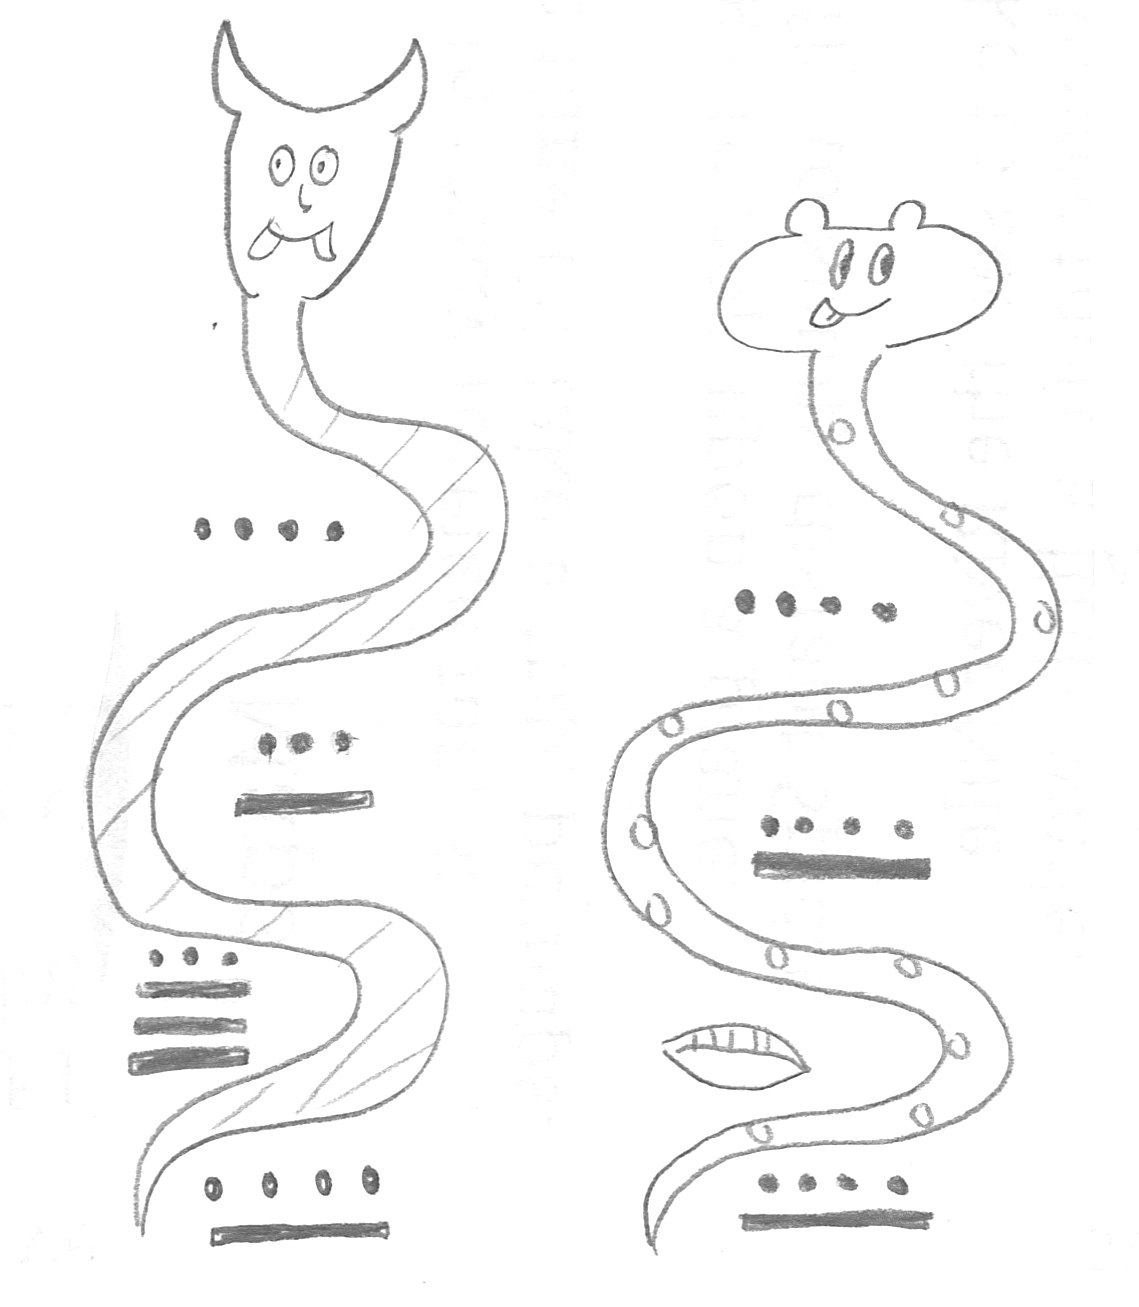 Serpent numbers 2